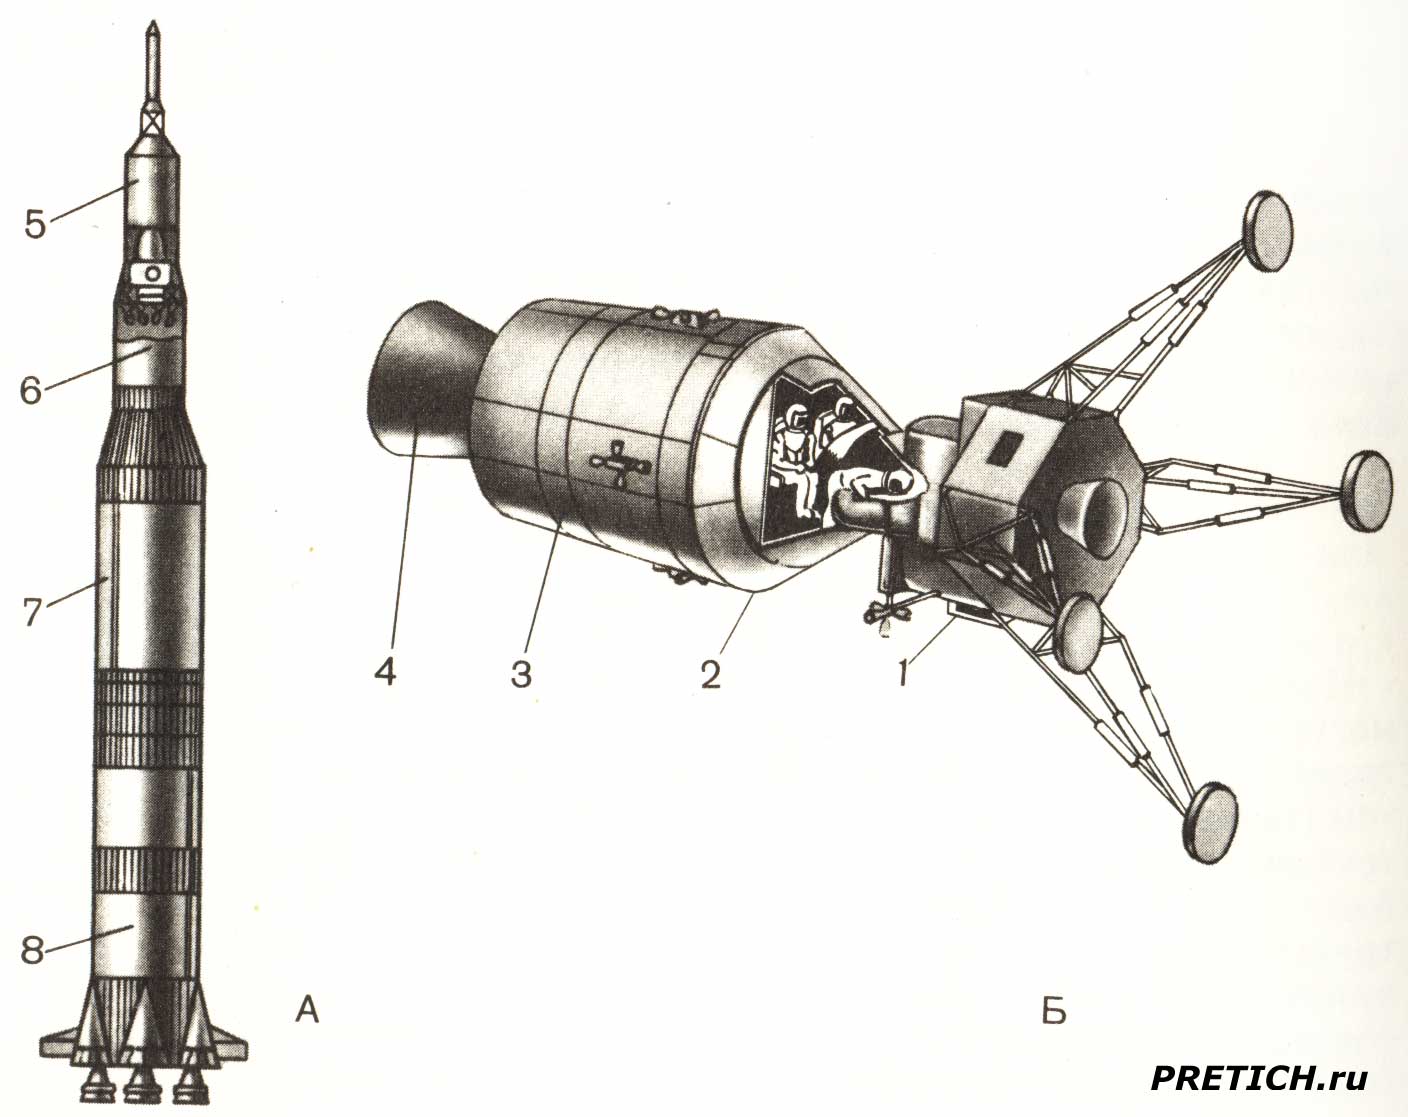 Сатурн-5 и корабль Аполлон с лунным модулем, программа